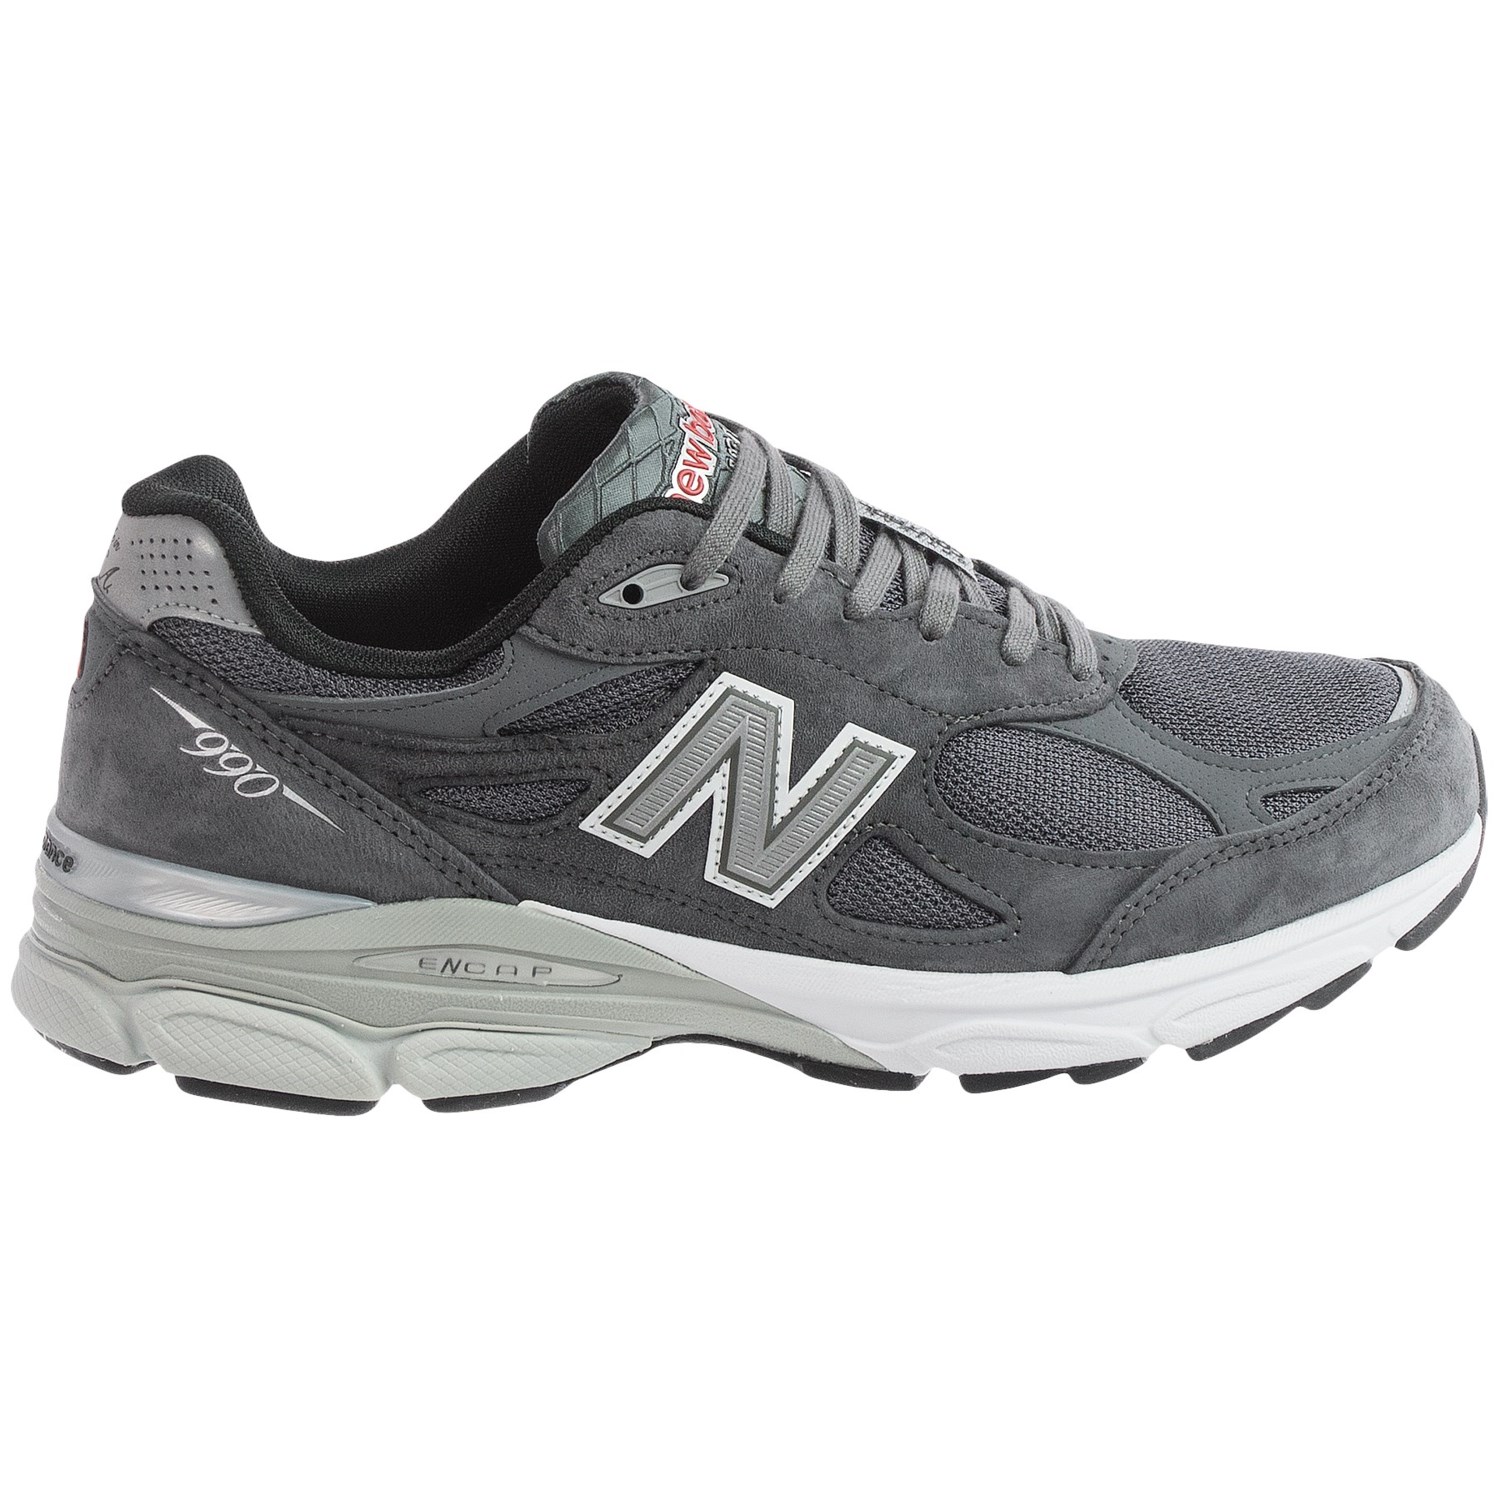 New Balance 990v3 Running Shoes (For Men) - Save 54%